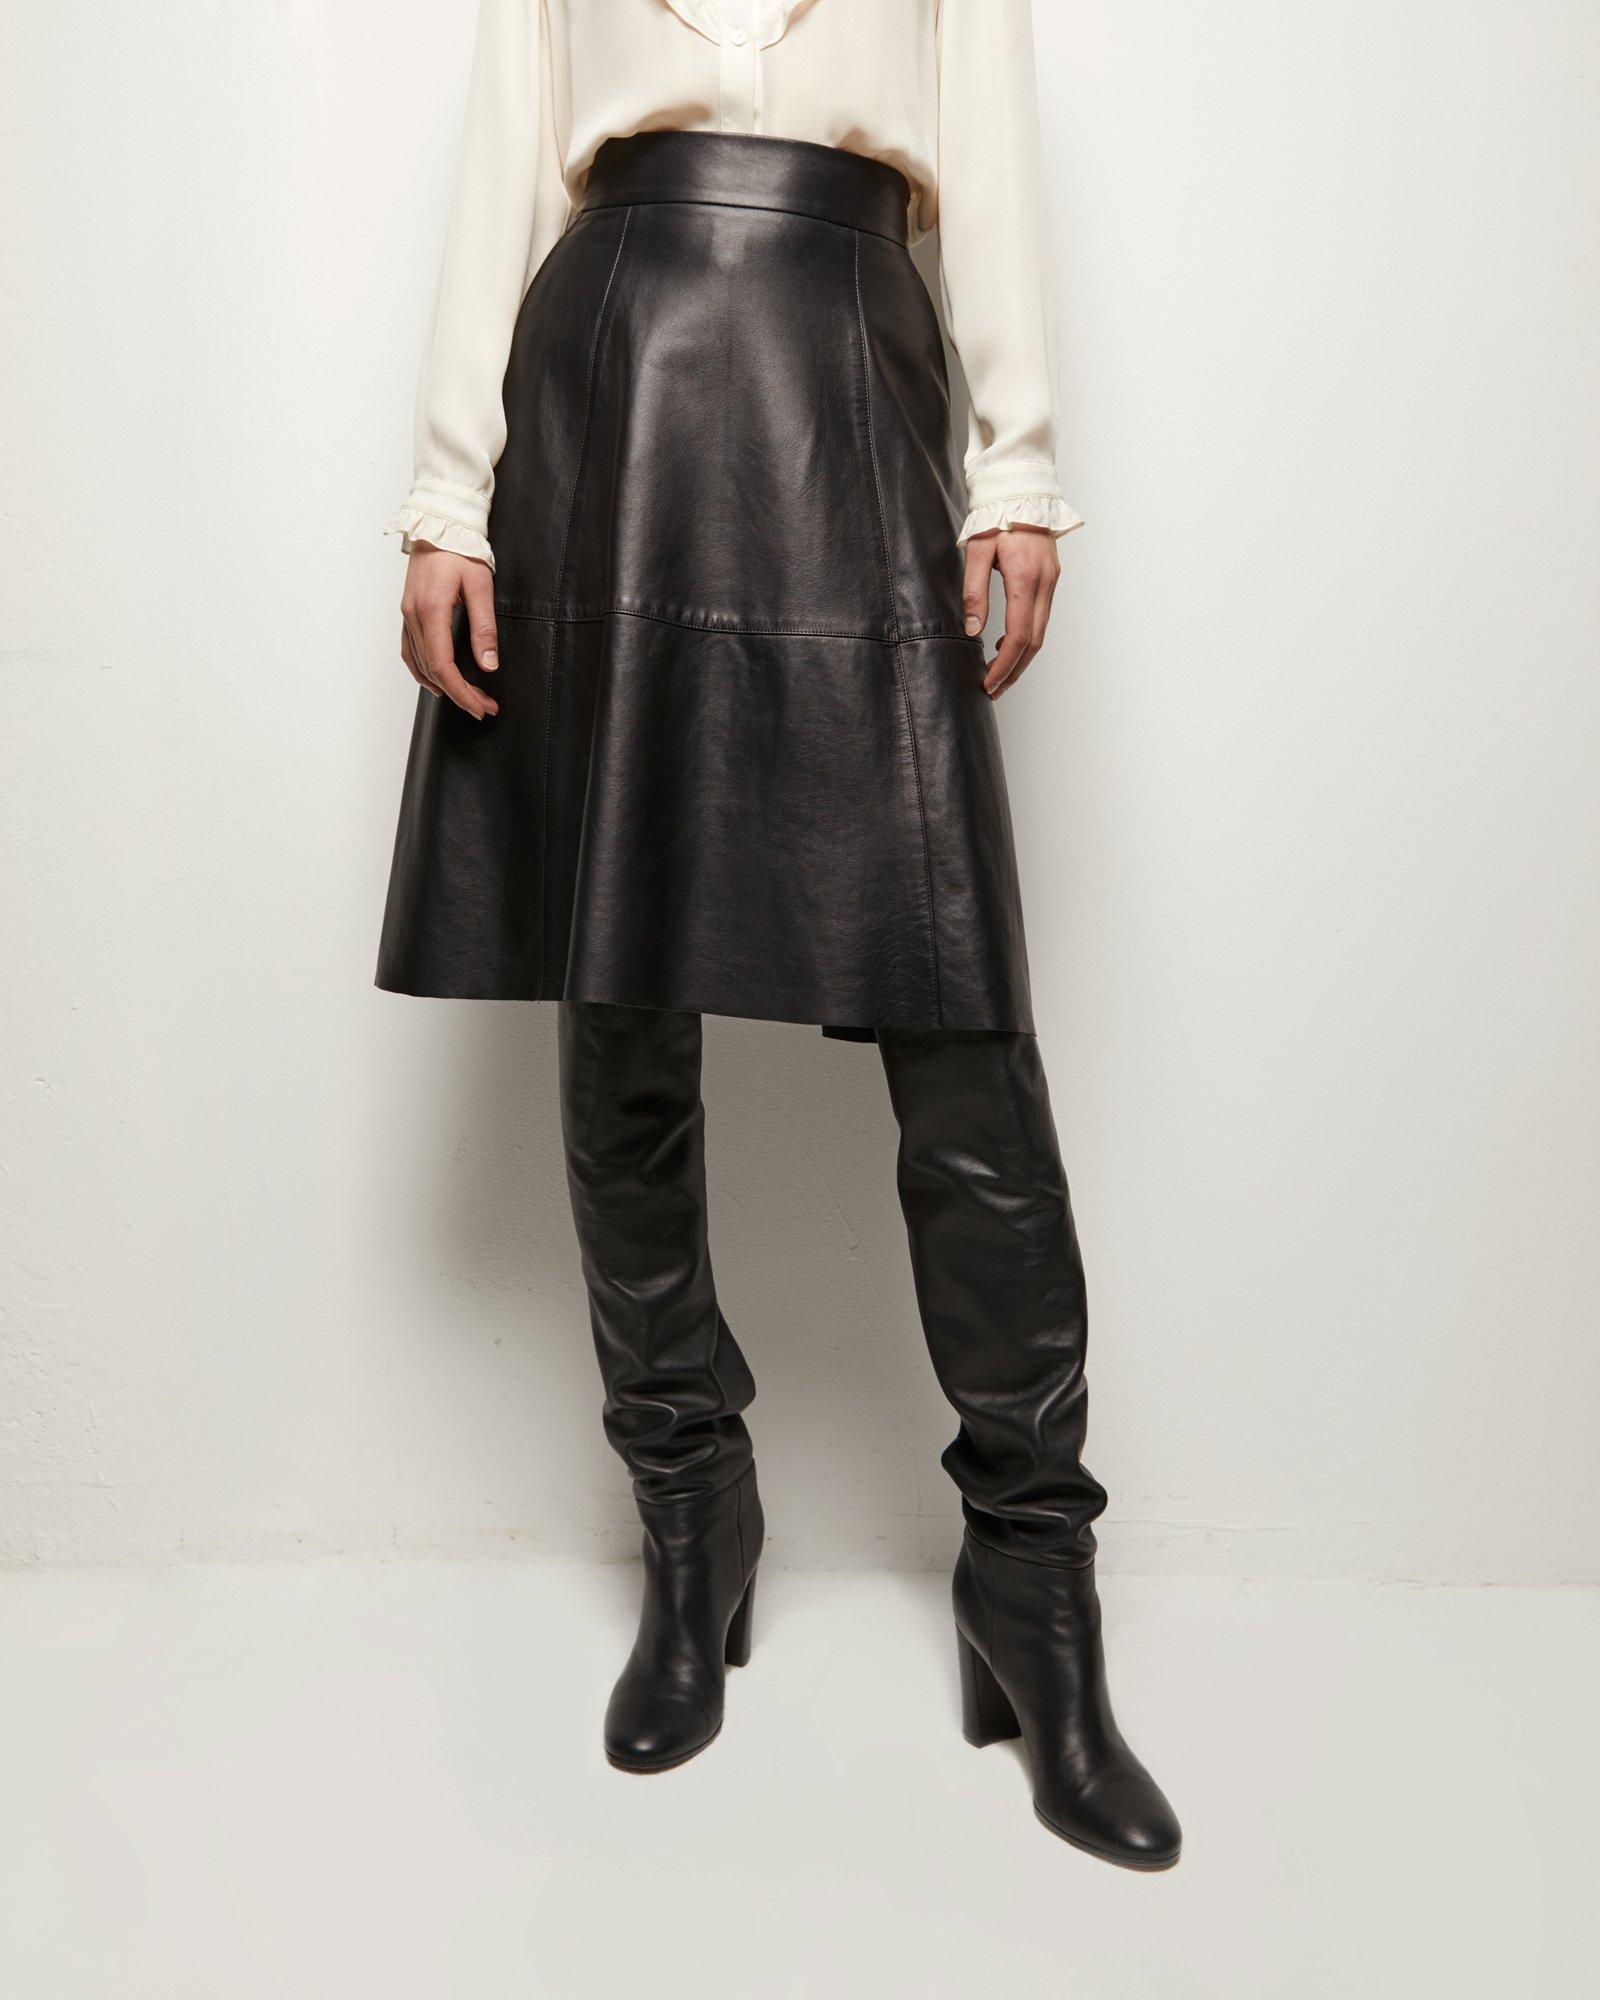 Nili Lotan Leather Elaine Skirt in Black - Lyst